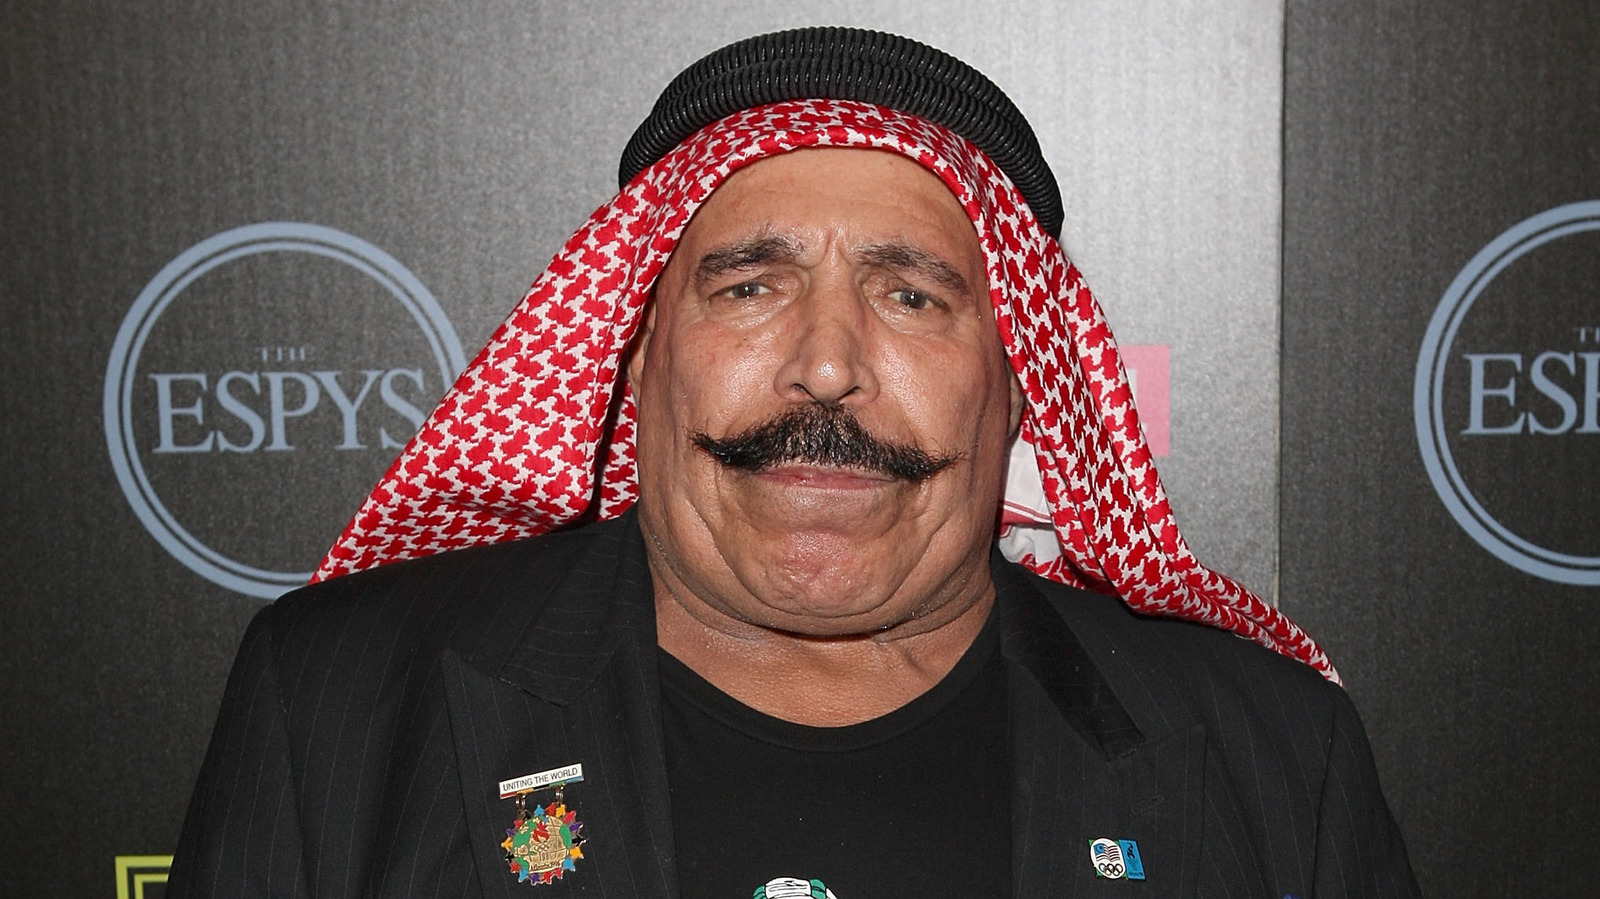 Iron Sheik's Death Certificate Reveals He Died From Cardiac Arrest